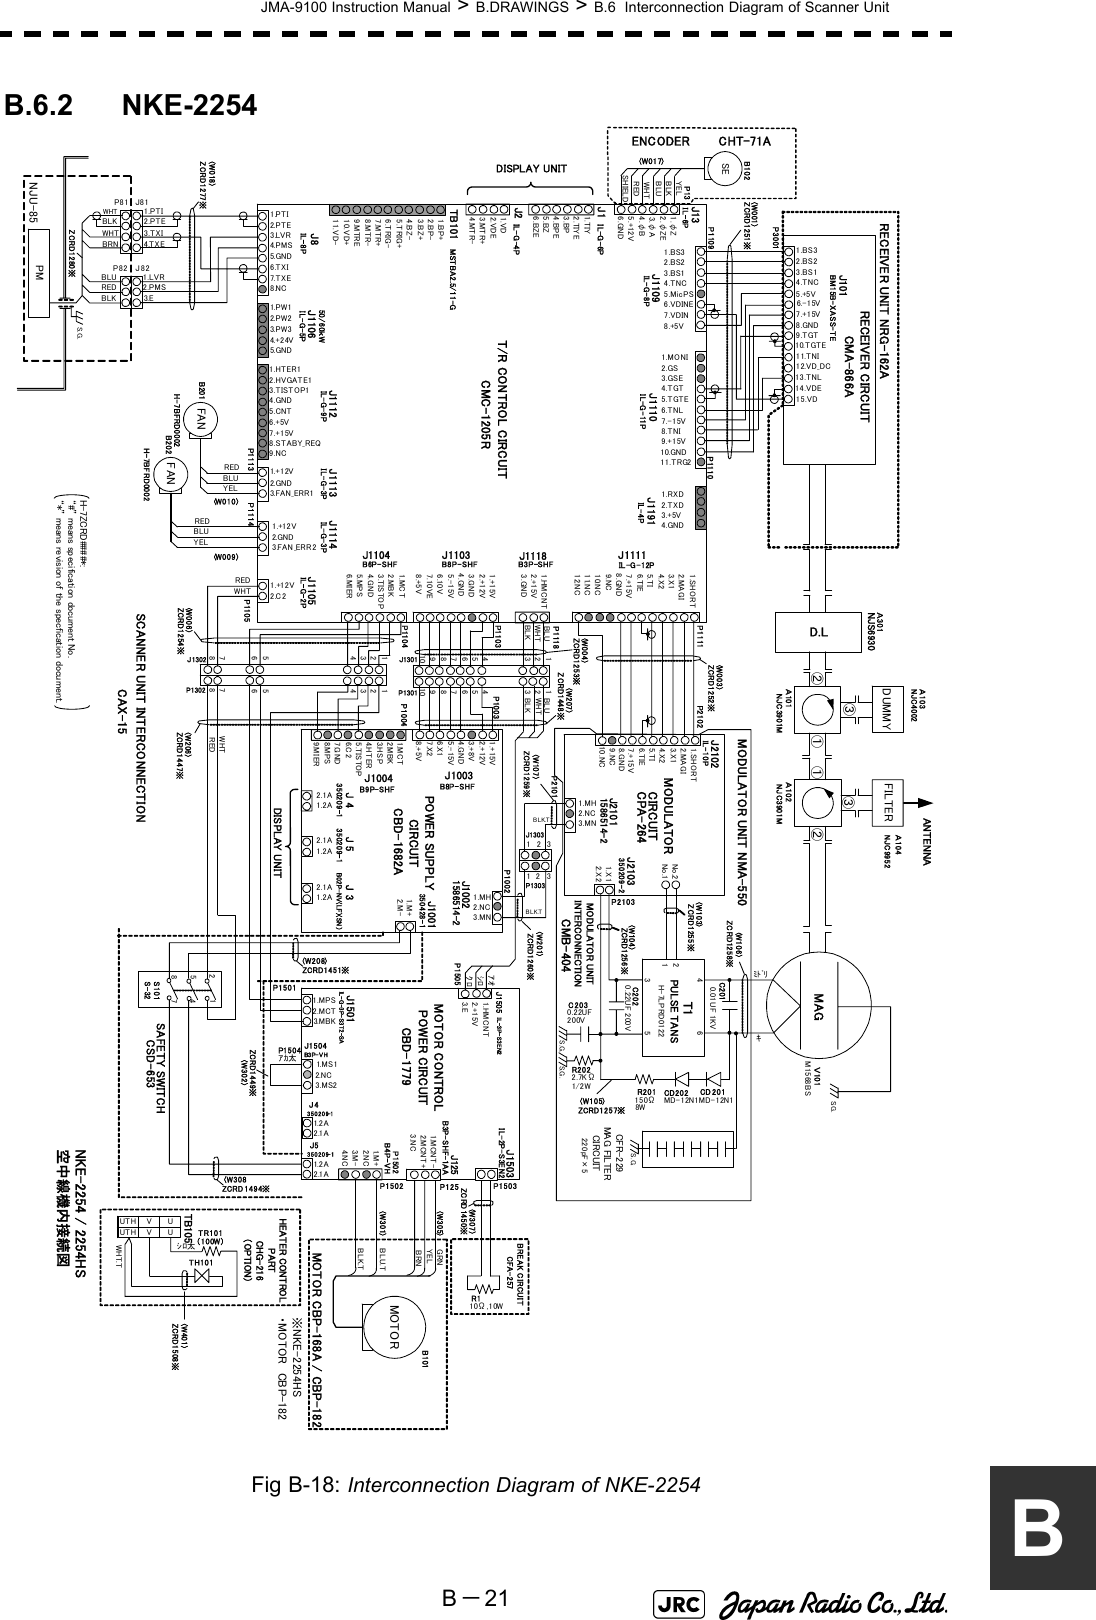 JMA-9100 Instruction Manual &gt; B.DRAWINGS &gt; B.6  Interconnection Diagram of Scanner UnitB－21BB.6.2 NKE-2254Fig B-18: Interconnection Diagram of NKE-2254 NKE-2254 / 2254HS空中線機内接続図14.VDE12.VD_DC15.VD9.TGT10.TGTE13.TNL11.TNI1.BS32.BS23.BS14.TNC5.+5V6.-15V7.+15VRECEIVER UNIT NRG-162ARECEIVER CIRCUIT CMA-866AJ101BM15B-XASS-TET/R CONTROL CIRCUITCMC-1205R1.MONI2.GS3.GSE4.TGT5.TGTE6.TNL7.-15V8.TNI9.+15V10.GND11.TRG21.BS32.BS23.BS14.TNC5.MicPS6.VDINE7.VDIN8.+5V1.RXD2.TXD3.+5V4.GND1.SHORT2.MAG I3. X 14. X 25.T I6.T IE7.+15V8.GND9.NC10.NC11.NC12.NC1.HMCNT2.+15V3.GND1.+15V2.+12V3.GND4.GND5.-15V6.10V7.10VE8.+5V1.MC T2.MBK3.TISTOP4.G ND5.MPS6. MI E R1. T IY2.TIYE3.BP4.BPE5.BZ6.BZE1.+12V2.GN D3.FAN_ERR11.HTER12.HVGATE13.TISTOP14.GND5.CNT6.+5V7.+15V8.STABY_REQ9.NC1.PW12.PW23.PW34.+24V5.GN D1.BP+2.BP-3.BZ+4.BZ-5.TRIG+6.TRIG-7.MTR+8.MTR-9.MTRE10.VD+11.VD-1.V D2.V DE3.MTR+4.MTR-J1118J1103J1104 J1111J1191J1110J1109TB101J8 J1106J1112 J1113IL -G - 1 2PIL-G-8P IL-G-11PB6P-SHFIL-G-9PMSTBA2.5/11-GIL-G-5PB3P-SHFIL-4PB8P-SHFIL-G-3PMAGPOWER  SUPPLY CIRCUITCBD-1682A1.+15V2.+12V3.+8V4.GND5.-15V6.X17.X28.+5V1.M C T2.MBK3.H S P4.H T ER5.TISTOP6.C 27.GND8.M P S9.M I ER2.1A1.2A2.1A1.2A2.1A1.2A1.MH2.NC3.MN1.MH2.NC3.MN1.X12.X2No.2No.1214356FILTERJ1004 J1003J 5J 4 J 3J1001J1002J2102J210 1J2103ANTENNA1. S HO R T2.MAG I3. X 14. X 25. T I6. T IE7.+15VB9P-SHF B8P-SHF1586514-2350209-1IL-10P350209-2350209-1350428-1MODULATOR CIRCUITCPA-264MODULATOR UNIT INTERCONNECTIONCMB-404D.L①②③①②③ﾐﾄﾞﾘｷC2010.0 1UF 1K VC2020.22UF 200VR202 2.7KΩ1/2WC2030.22UF200VT1 R201150Ω8WH-7LPRD0122CD202 CD201MD-12N1MD-12N1Ａ101 Ａ102M1568BSＶ101P3001P1109 P1110P1104P1103 P1003P1004P1111PULSE TANSP2103DUMMYＡ103(W001)(W003)P10021.+12V2.GND3.FAN_ERR2J1114IL-G-3P1.+12V2.C2J1105IL-G-2PP1105MODULATOR UNIT NMA-550SCANNER UNIT INTERCONNECTIONCAX-15(W106)(W103)(W104)(W105)ZCRD1255※ZCRD1257※P1505J1IL-G-6PJ2IL- G -4PZCRD1256※Ａ301NJS6930ZCRD1252※ZCRD1258※ZCRD1251※ZCRD1253※(W004)(W207)ZCRD1448※ZCRD1254※1.φZ2.φZE3.φ A4.φB5.+12V6.GNDJ13IL-6P50/60ｋWREDWHTDISPLAY UNITP2101P21028.GND1.M+2.M-1586514-2NJC40029.NC10.NCB02P-NV(LF)(SN）S. G.S.G.S.G.8.G ND1234567891012345678910WHTBLKP1118BLUWHTBLKBLUP1301J1301(W006)1234123456567878SEYE LBLKBLUWHTREDSHIELDB102ENCODER CHT-71AP13(W017)FANREDBLUYELB201B202FANREDBLUYEL(W009)(W010)P1113 P1114REDWHTZCRD1447※(W206)ｼﾛｸﾛｱｵ12BLK.T21 33BLK.T(W107)ZCRD1259※J1303P1303P1302J1302(W201)ZCRD1260※1.PTI2.P T E3.LVR4.PMS5.GN D6.TXI7. T X E8.NCIL-8P1.PTI2.PTE1.LVR2.PMS3.E3.TXI4.TXEJ82J81PMP81P82WHTBLKBLUREDBLKWHTBRNNJU-85ZCRD1280※(W018)ZCRD1277※S.G.S101S-32217548CBD-1779IL-3P-S3EN2J15051.H MC N T2.+15V3.EJ15041. M S 12.NC3.MS2ｱｶ太P1504B3 P- V HP1501J15011.MPS2.MCTIL- G -3 P- S3 T 2 -SA(W302)ZCRD1449※(W307)J1503IL-2P-S3EN2R1 10Ω ,1 0WP1503ZCRD1450※GRNBRNBLU.TMOTOR CBP-168A / CBP-182YE L1.M+2.NC3.M-4.NCB4P-VHP1502J1251.M CN T -2.M CN T +3.NCP125B3P-SHF-1AAP1502B101MOTOR CONTROL POWER CIRCUIT(W305)(W301)BLK.TDISPLAY UNITMOTORBREAK CIRCUITCFA-257NJC3901M NJC3901MH-7BFRD0002H-7BFRD0002NJC9952Ａ104SAFETY SWITCHCSD-6531.2A2.1A1.2A2.1AJ4350209-1J5350209-13.MBKZCRD1451※(W208)ZCRD1494※(W308※NKE-2254HS・MOTOR CBP-182UVUTHUVUTHTH101WHT.TTR101（100W）ｼﾛ太HEATER CONTROL PARTCHG-216（OPTION）TB105S.G.CFR-229MAG  FIL TER  CIRCUIT220pF×5ZCRD1508※(W401)H-7ZCRD####*:“#” means  speci fication document No.“*” means  revision of the specficatio n document.